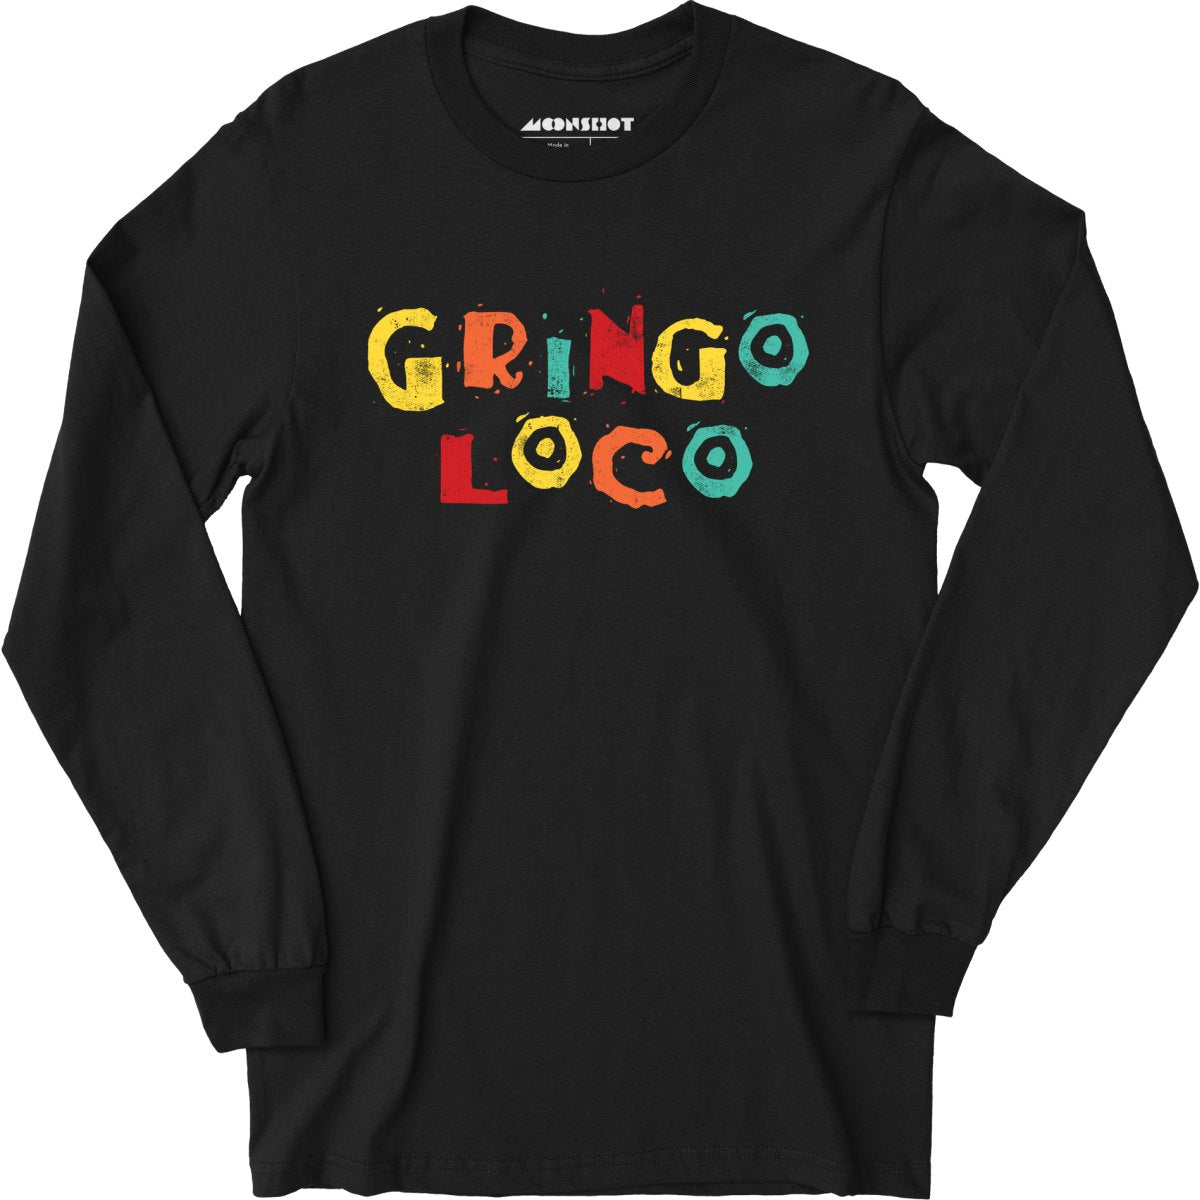 Gringo Loco - Long Sleeve T-Shirt